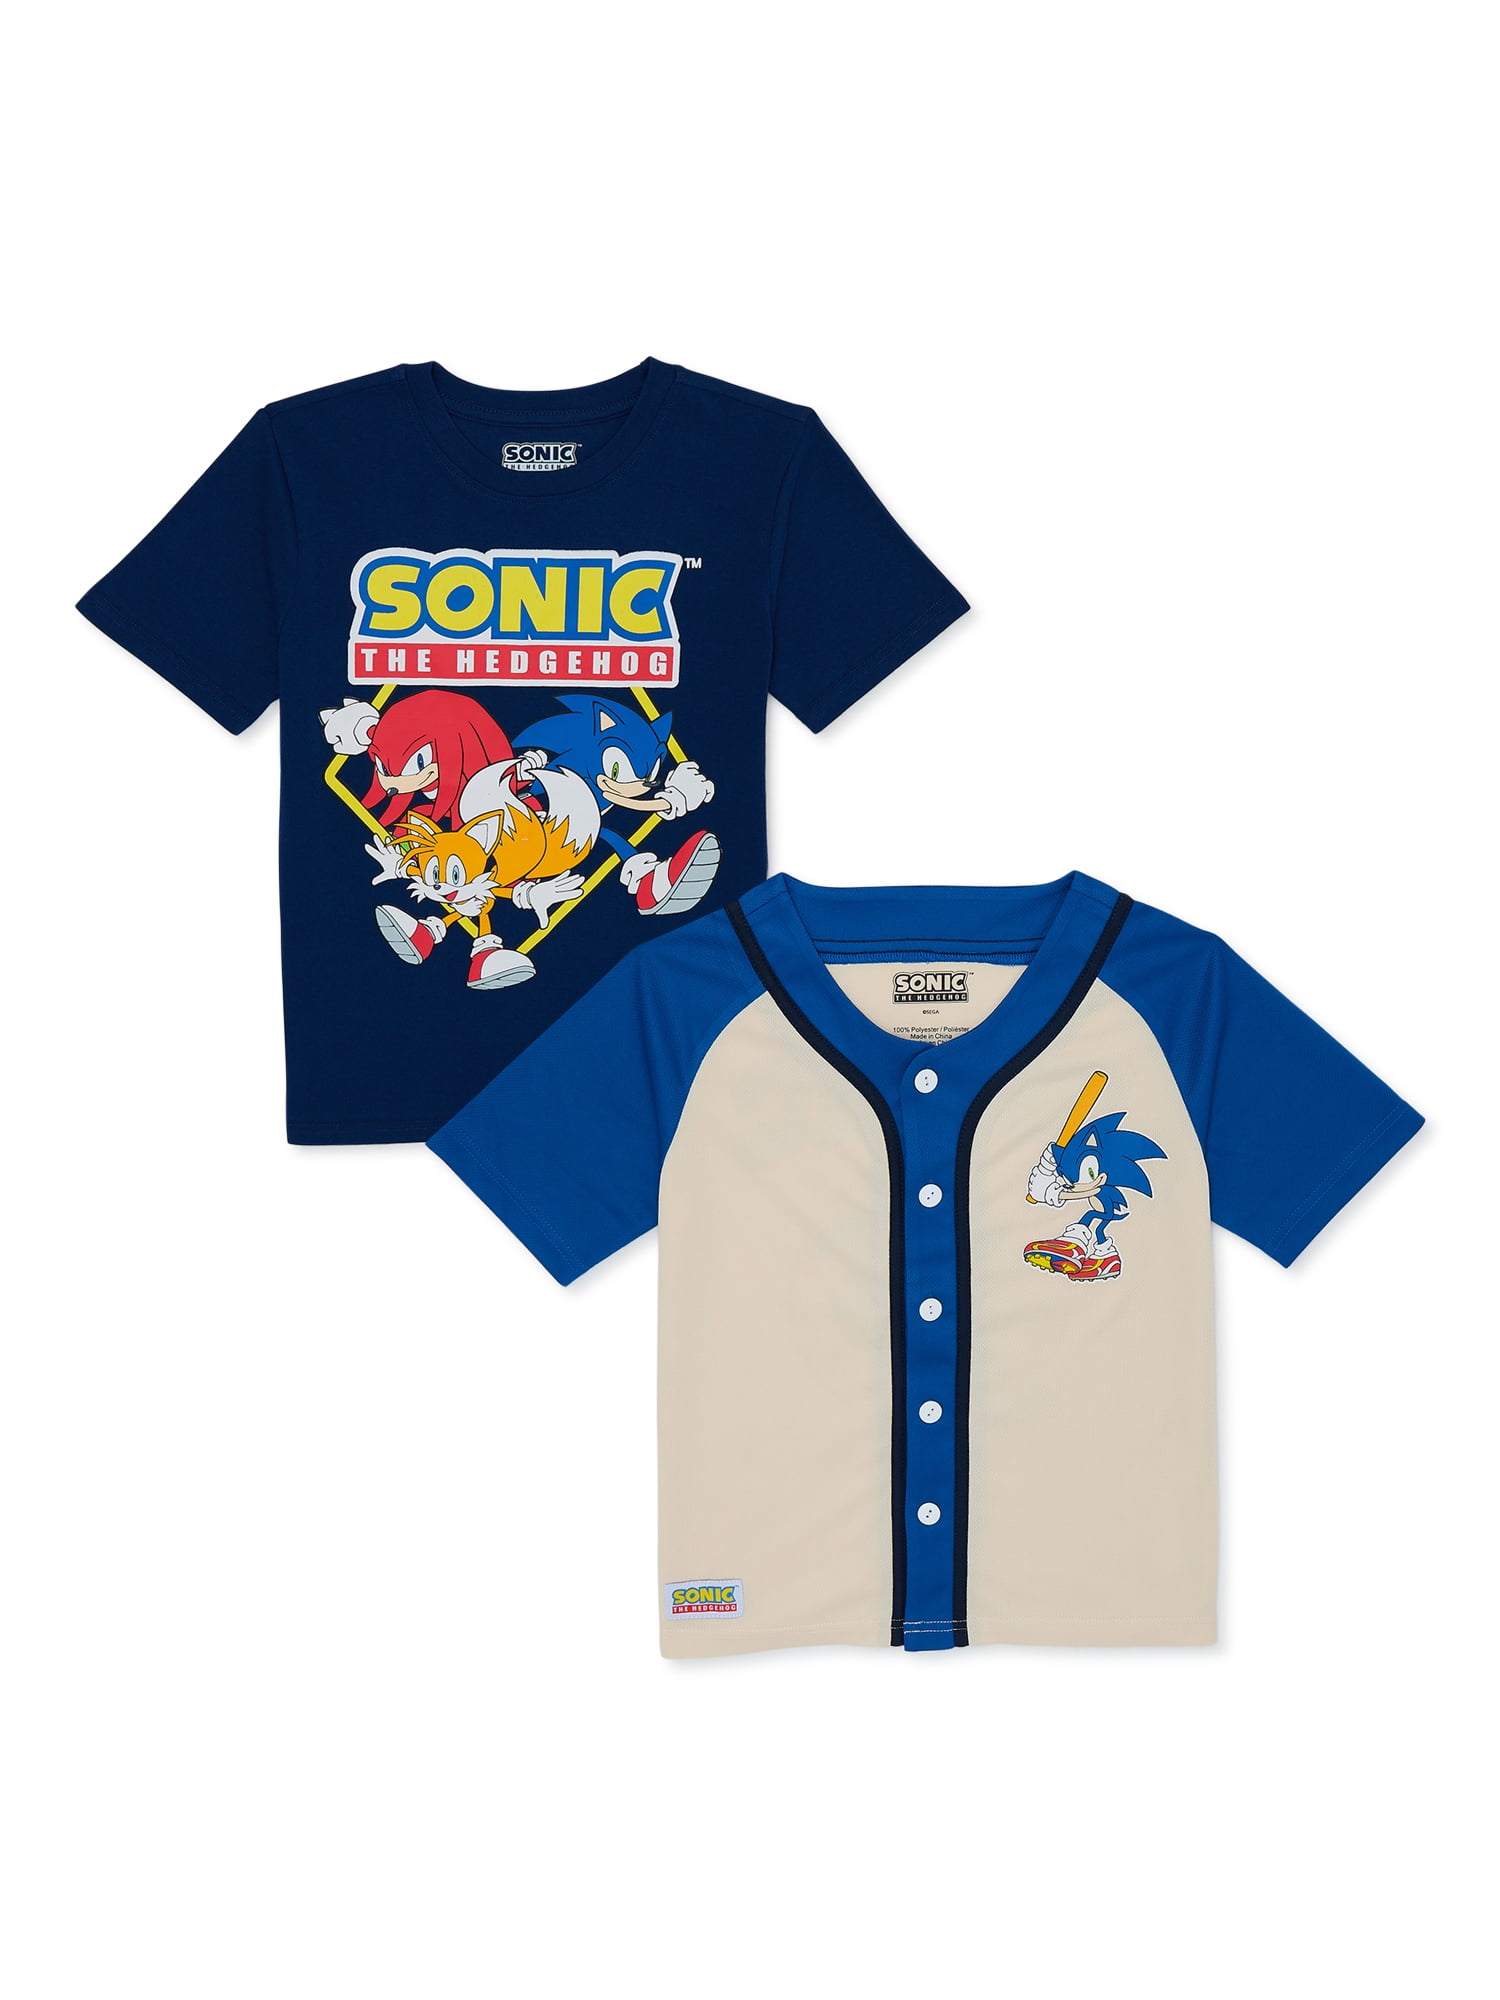 Best Sonic the Hedgehog Merch Online: T-Shirts, SEGA Games, Plushies